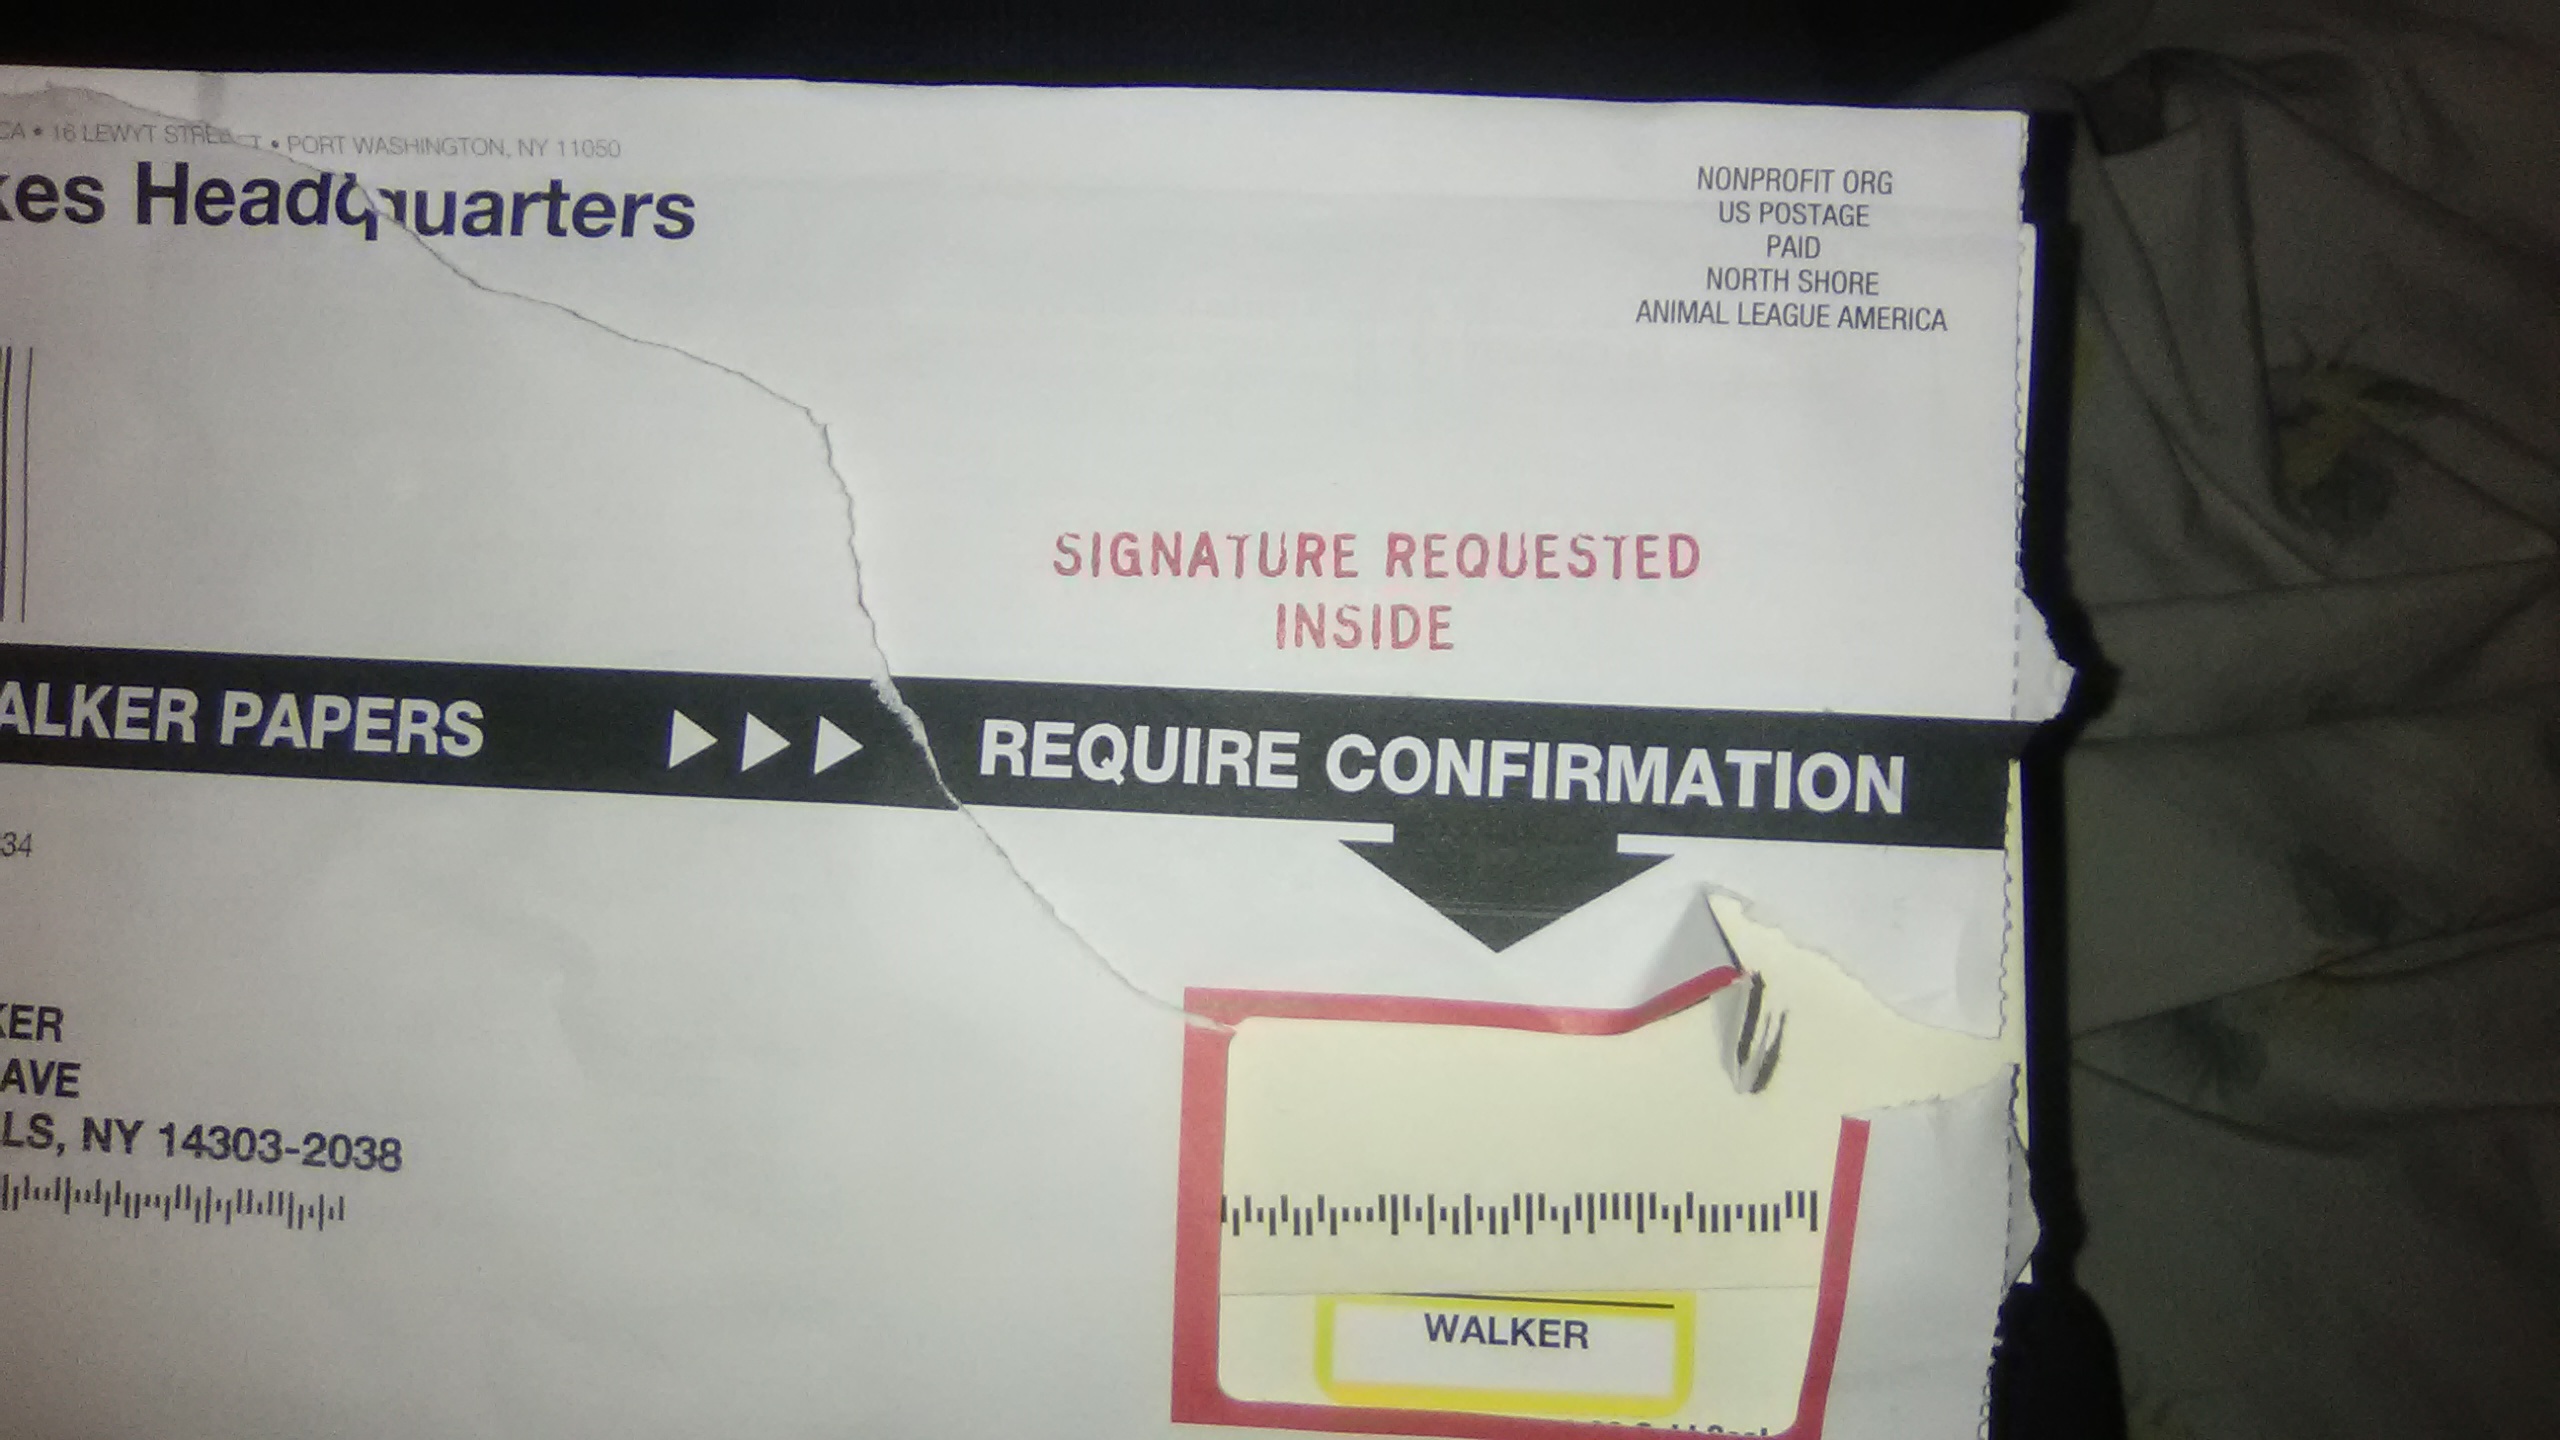 Address on envelope in corner right